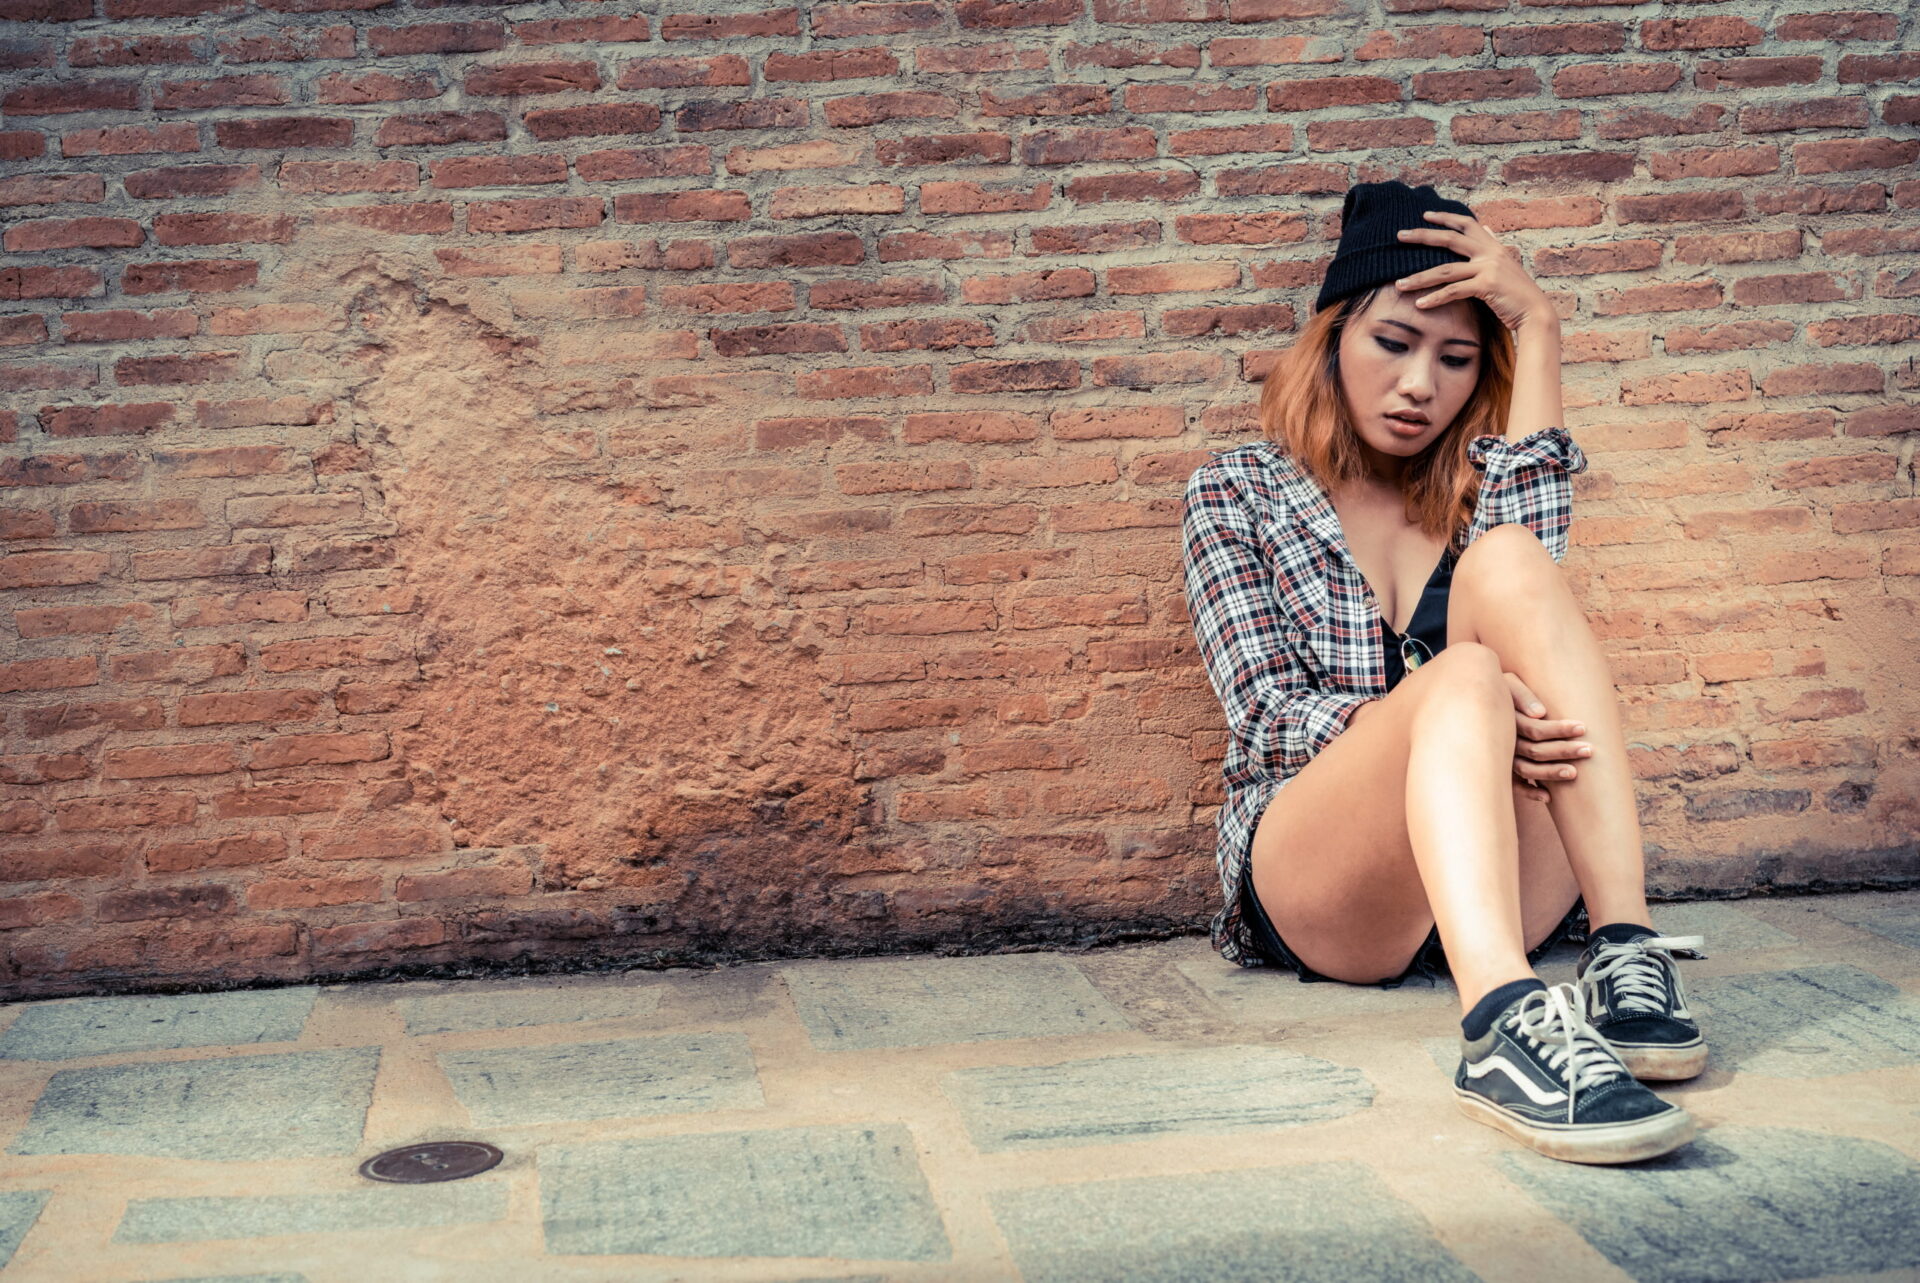 Depressed teenage woman feeling sad alone against brick wall in old town.